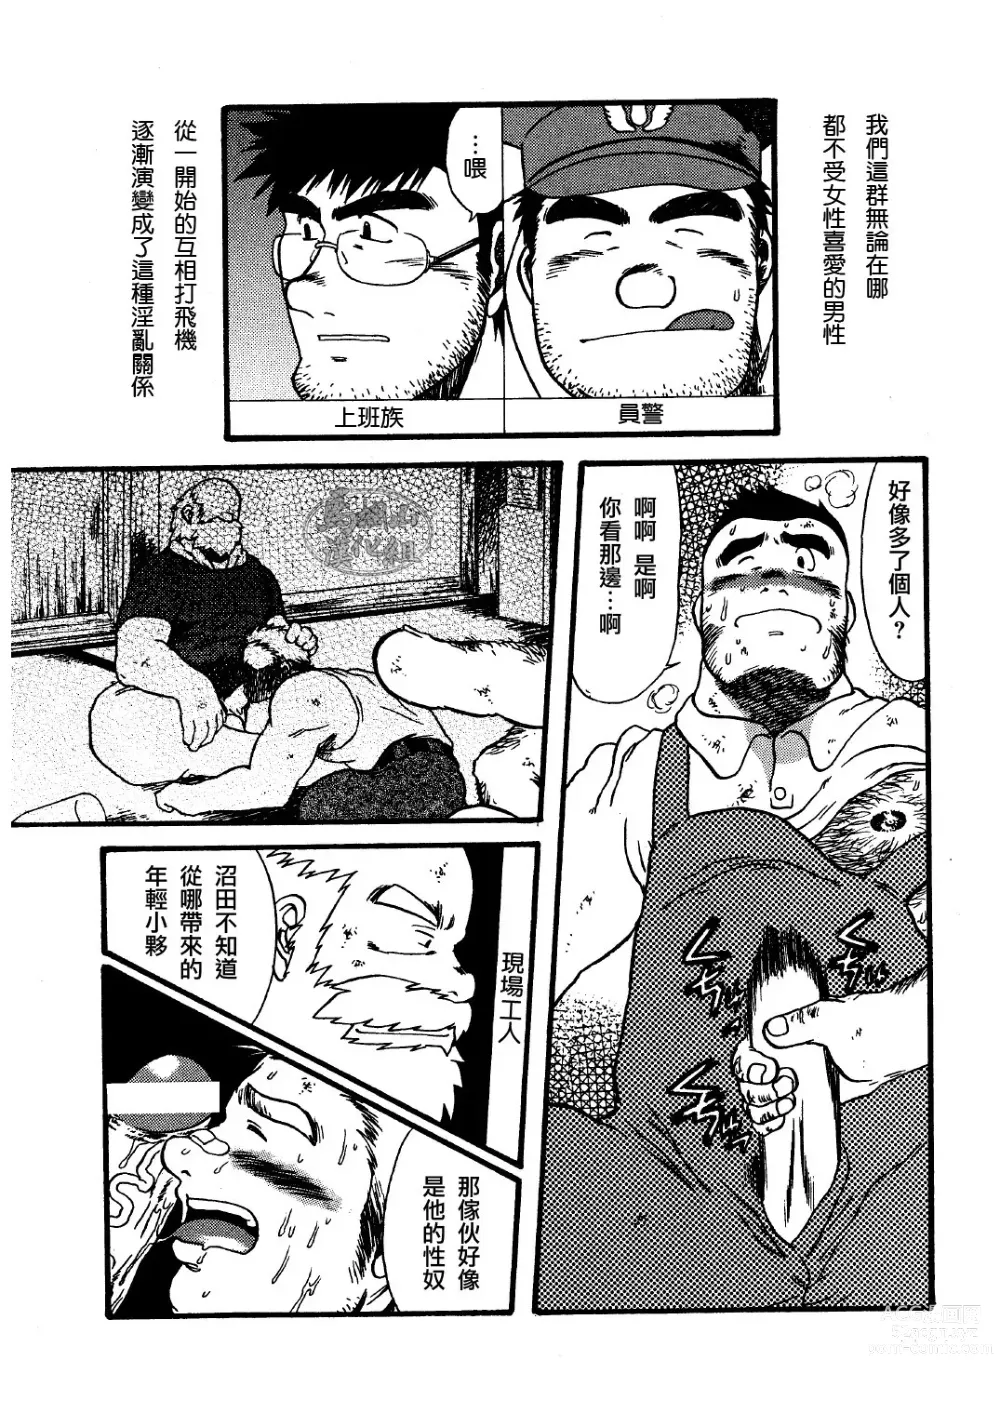 Page 3 of manga オルギア